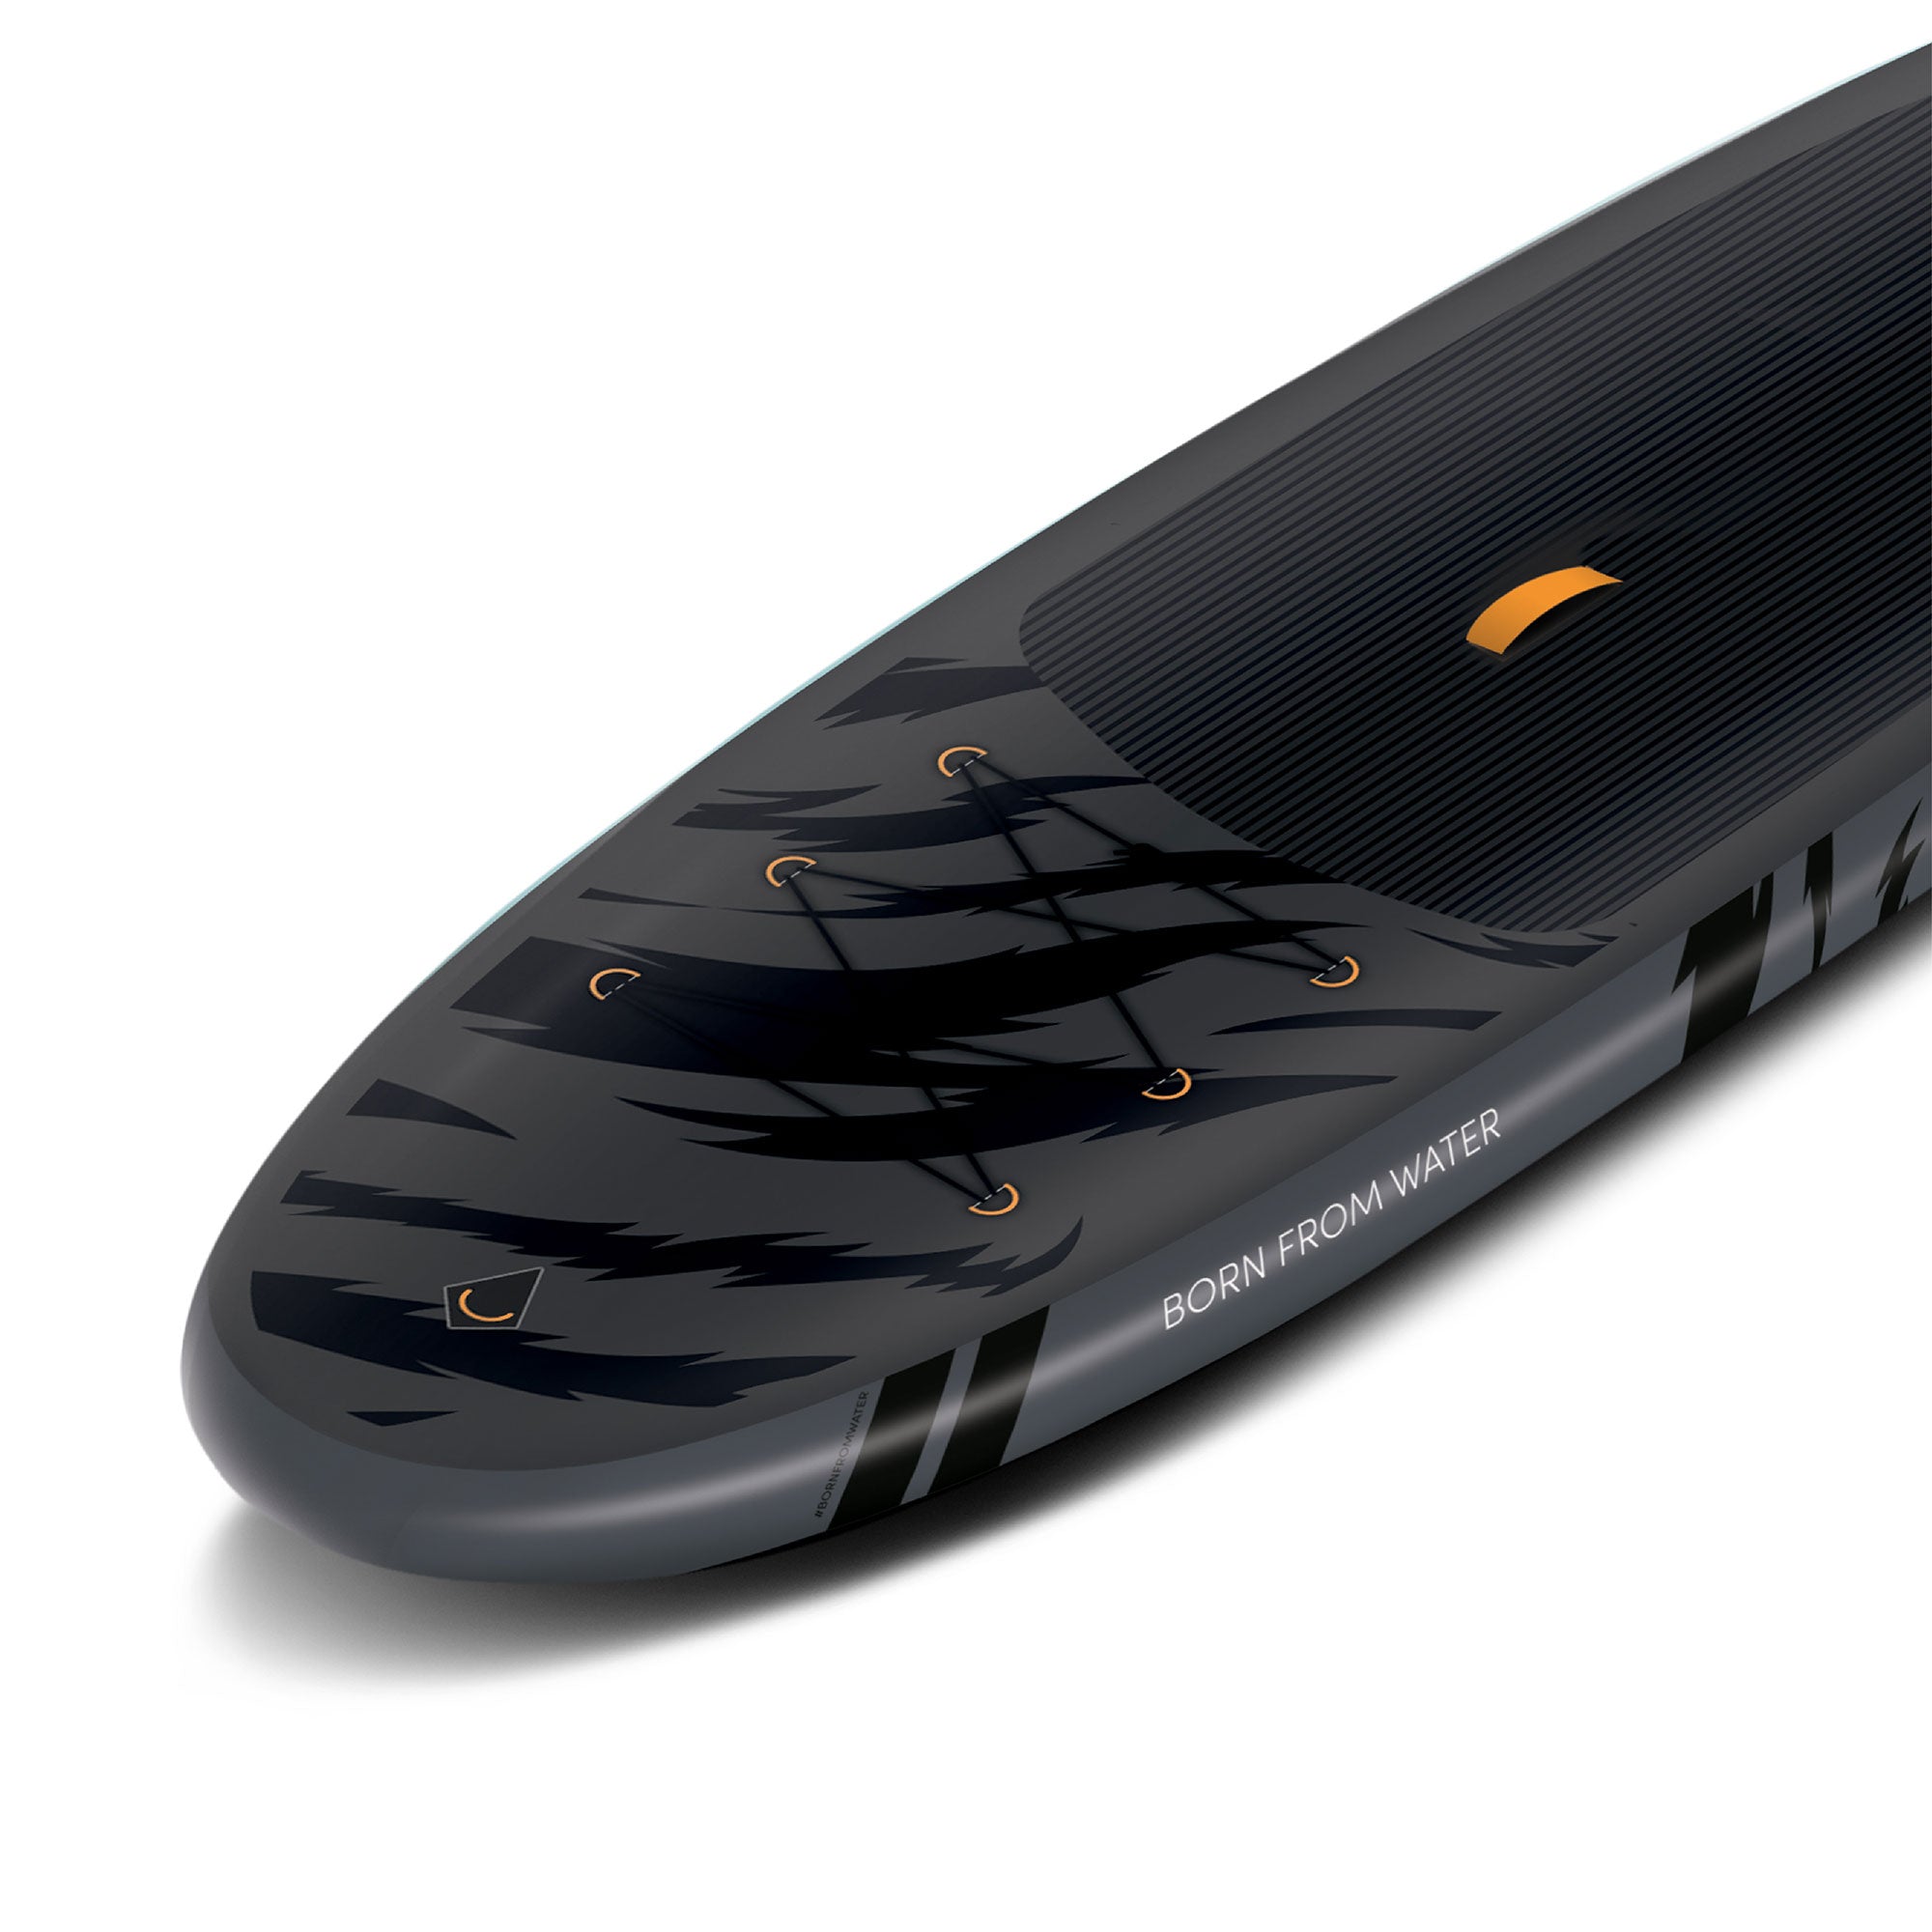 Hurley Advantage Black Tiger 10’ iSUP Set at HeySurf.com